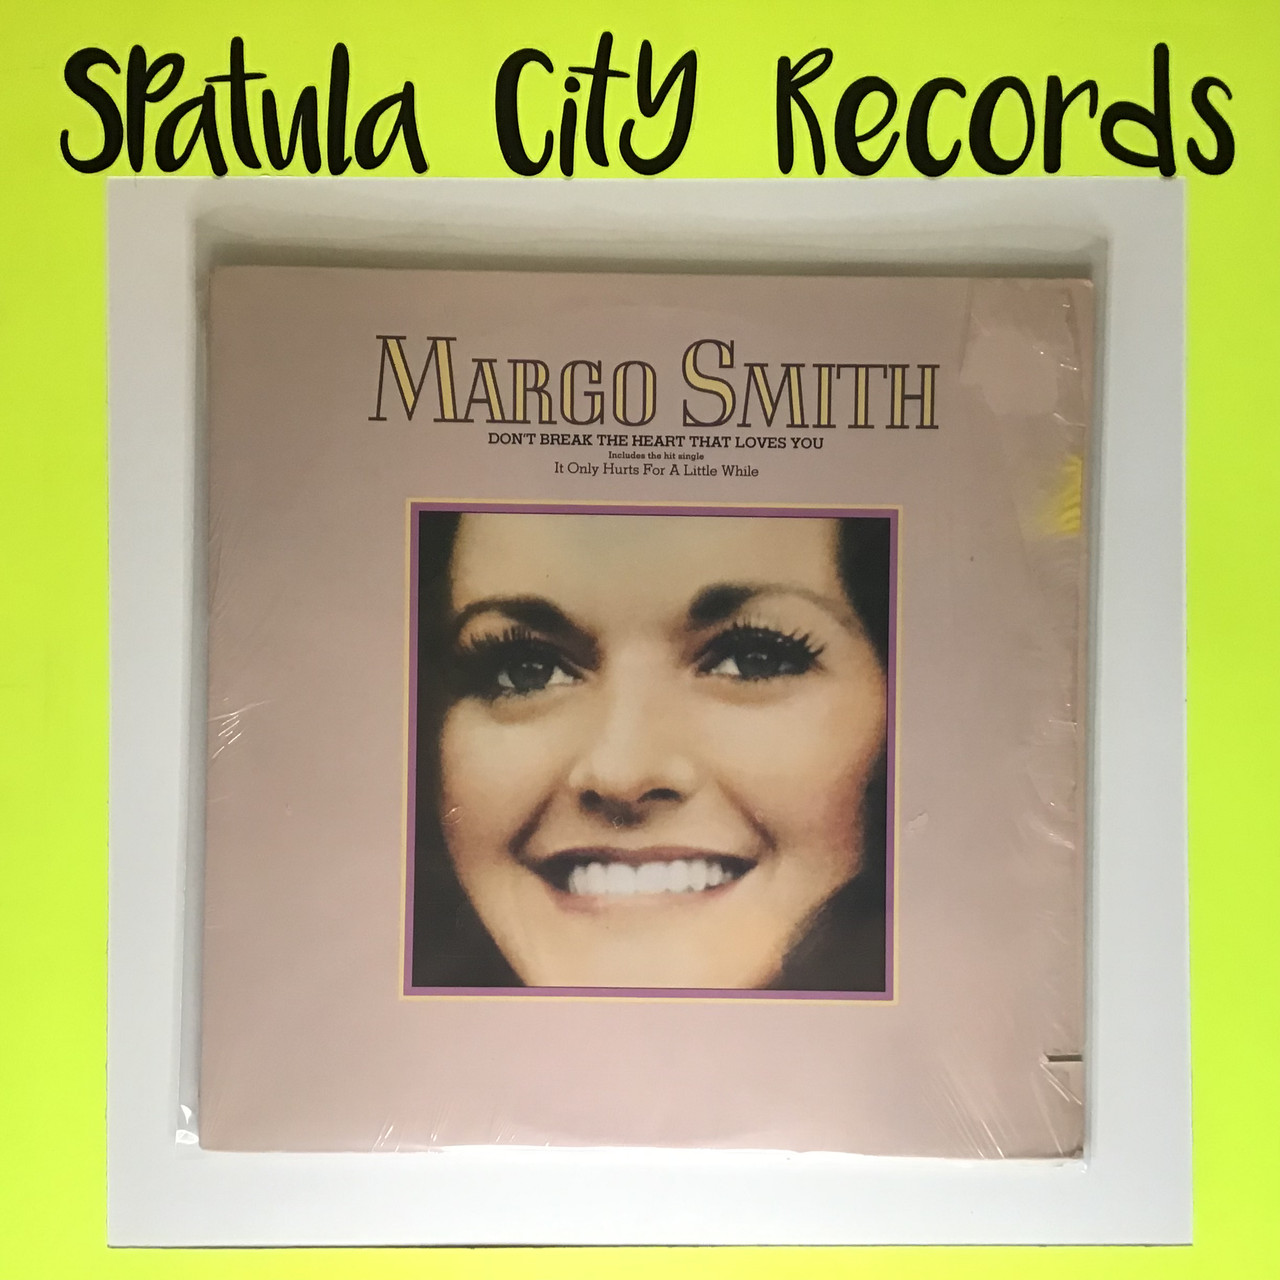 Margo Smith - Don't Break the Heart that loves you - vinyl record album LP